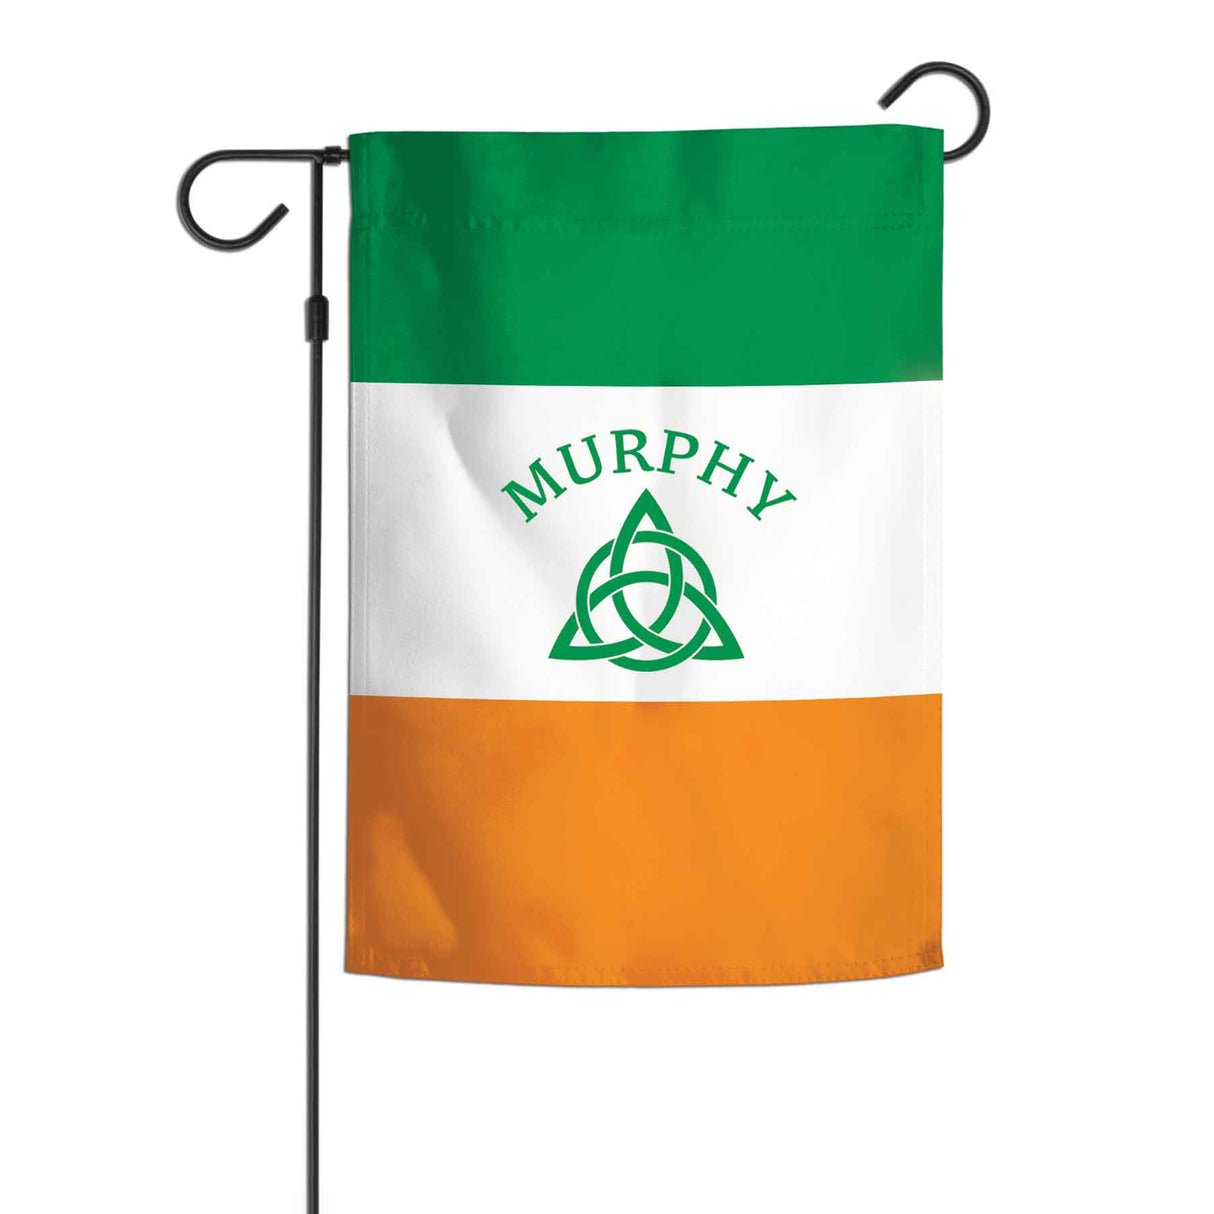 Personalized Garden Irish Flag and Flag Pole - Creative Irish Gifts